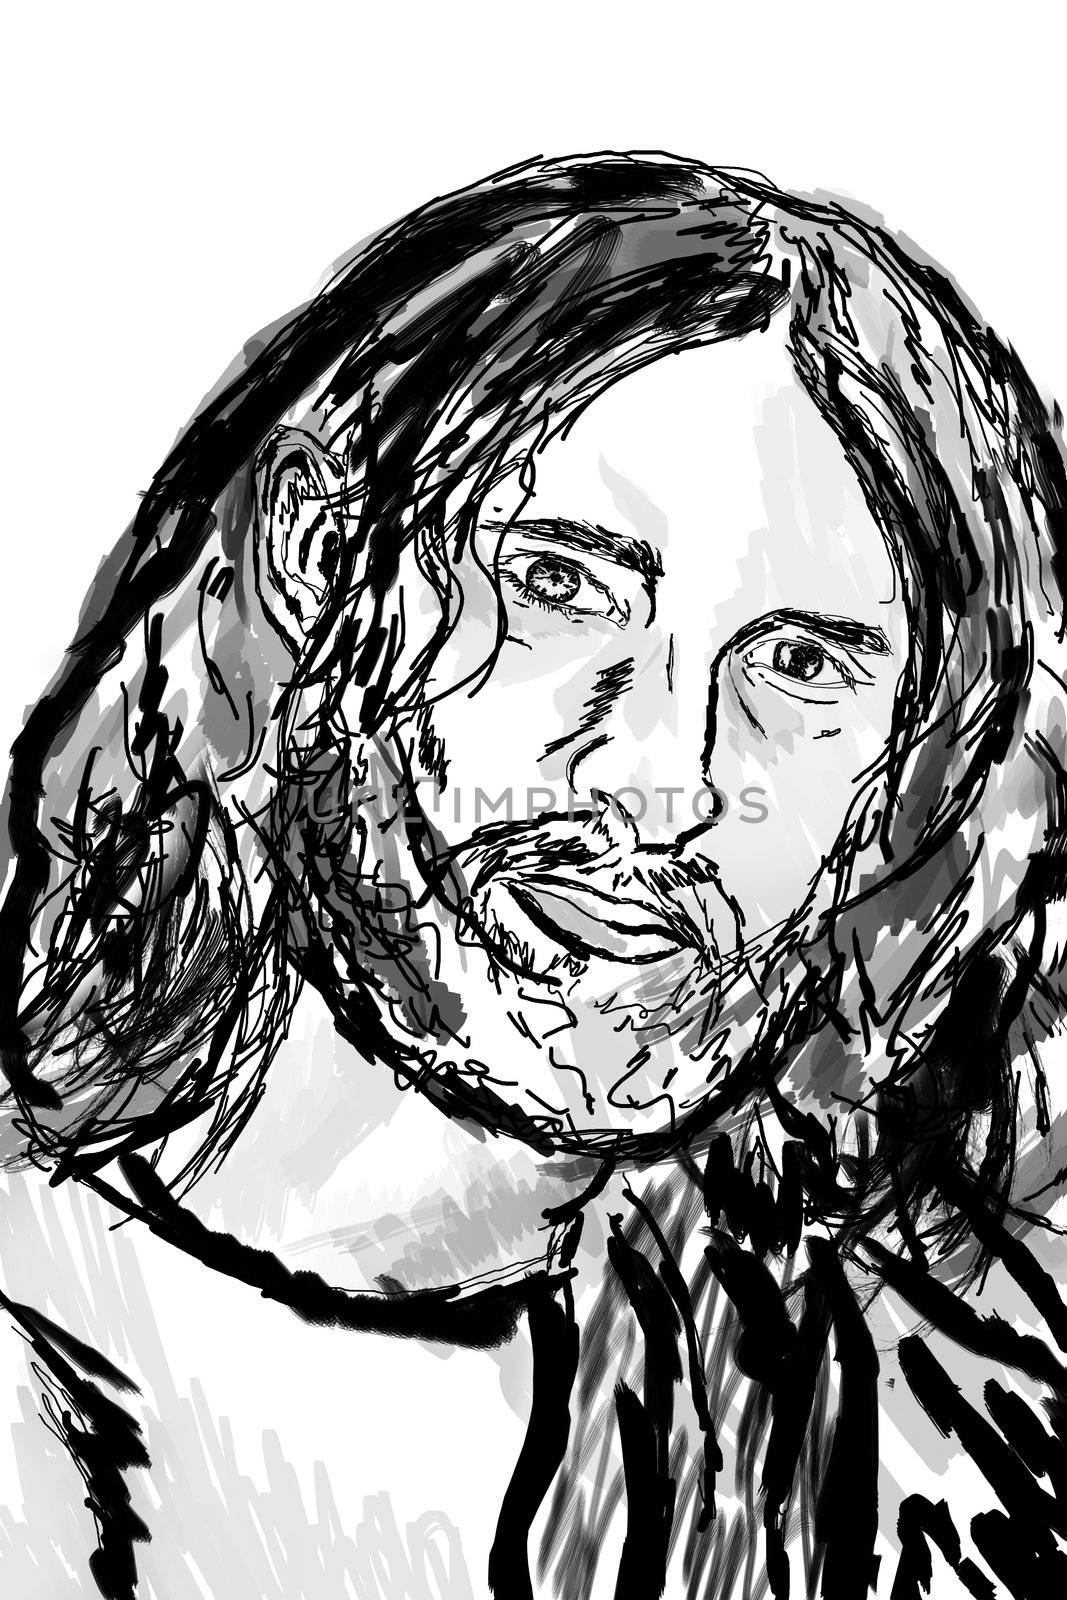 Sketch of a portrait of Jesus Christ.
